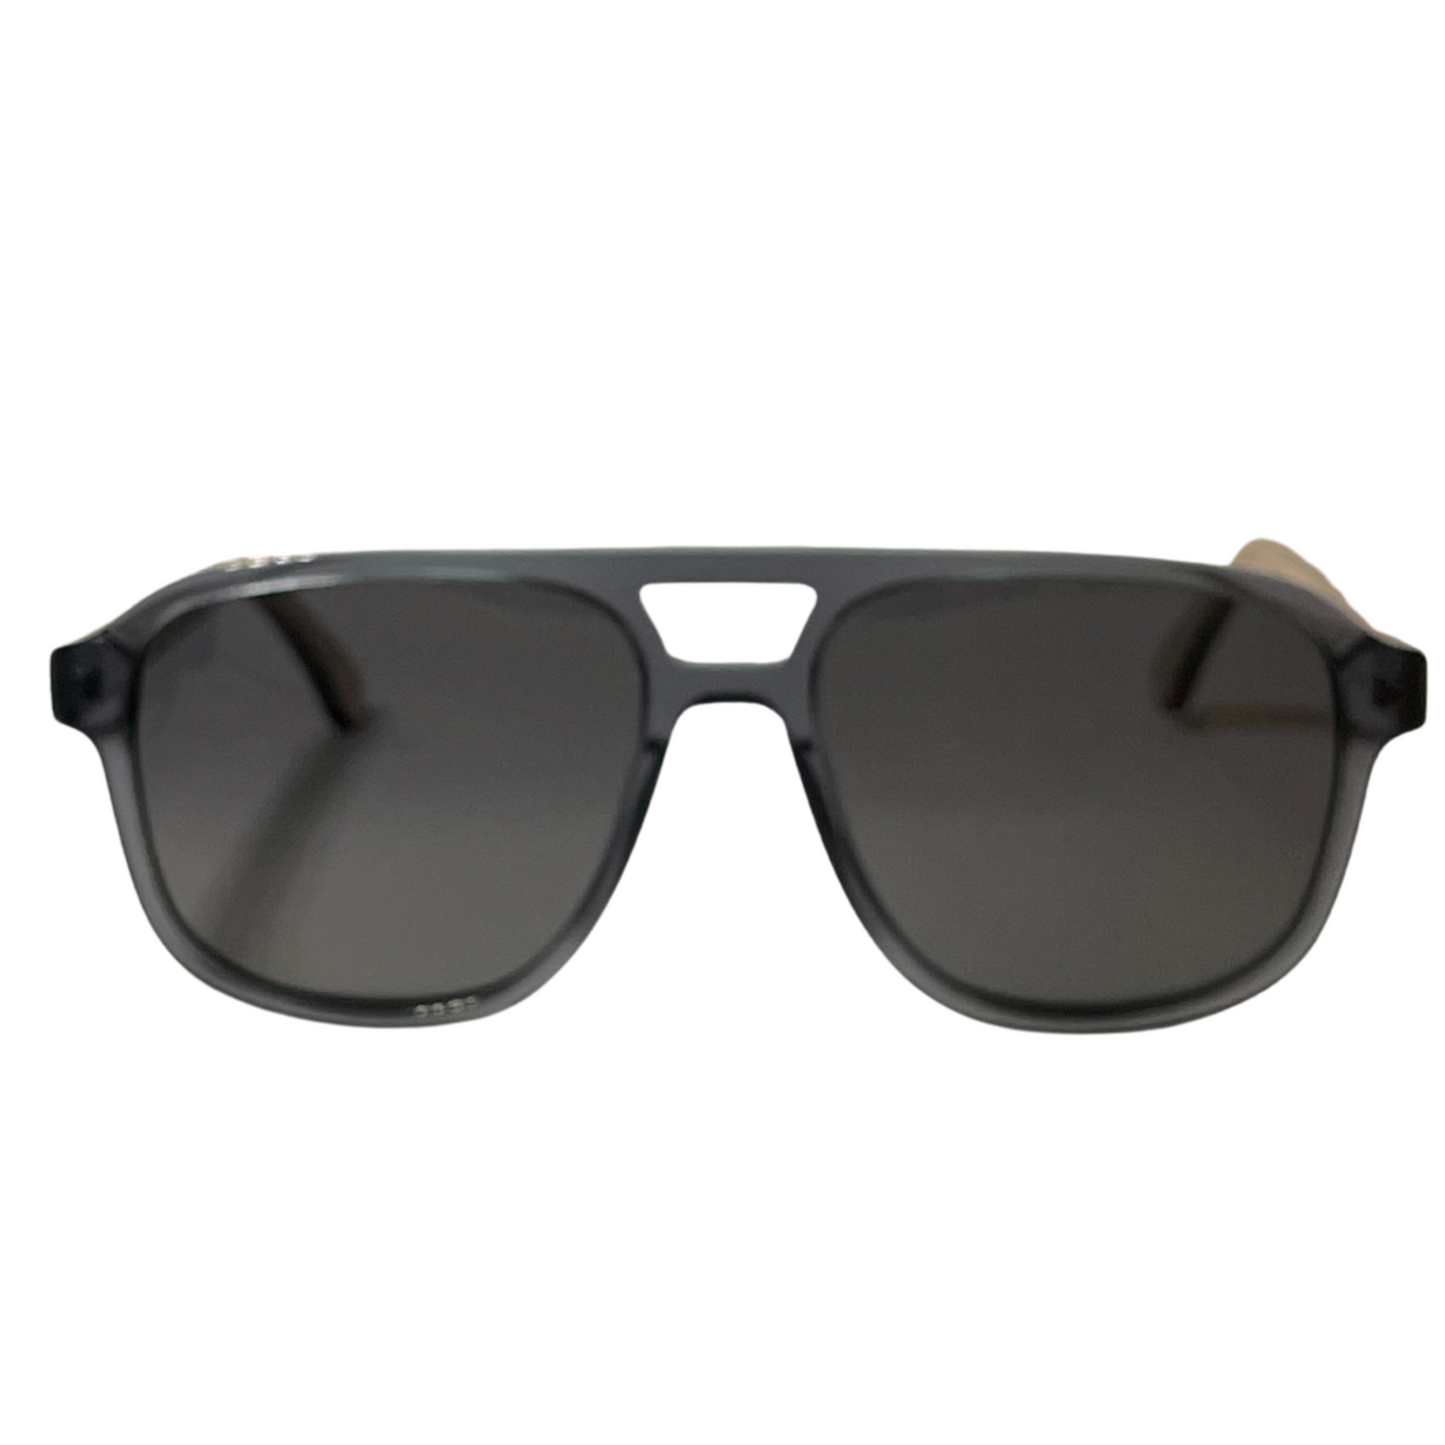 Flatiron Sunglasses - Woodensun Sunglasses | Eco-fashion eyewear